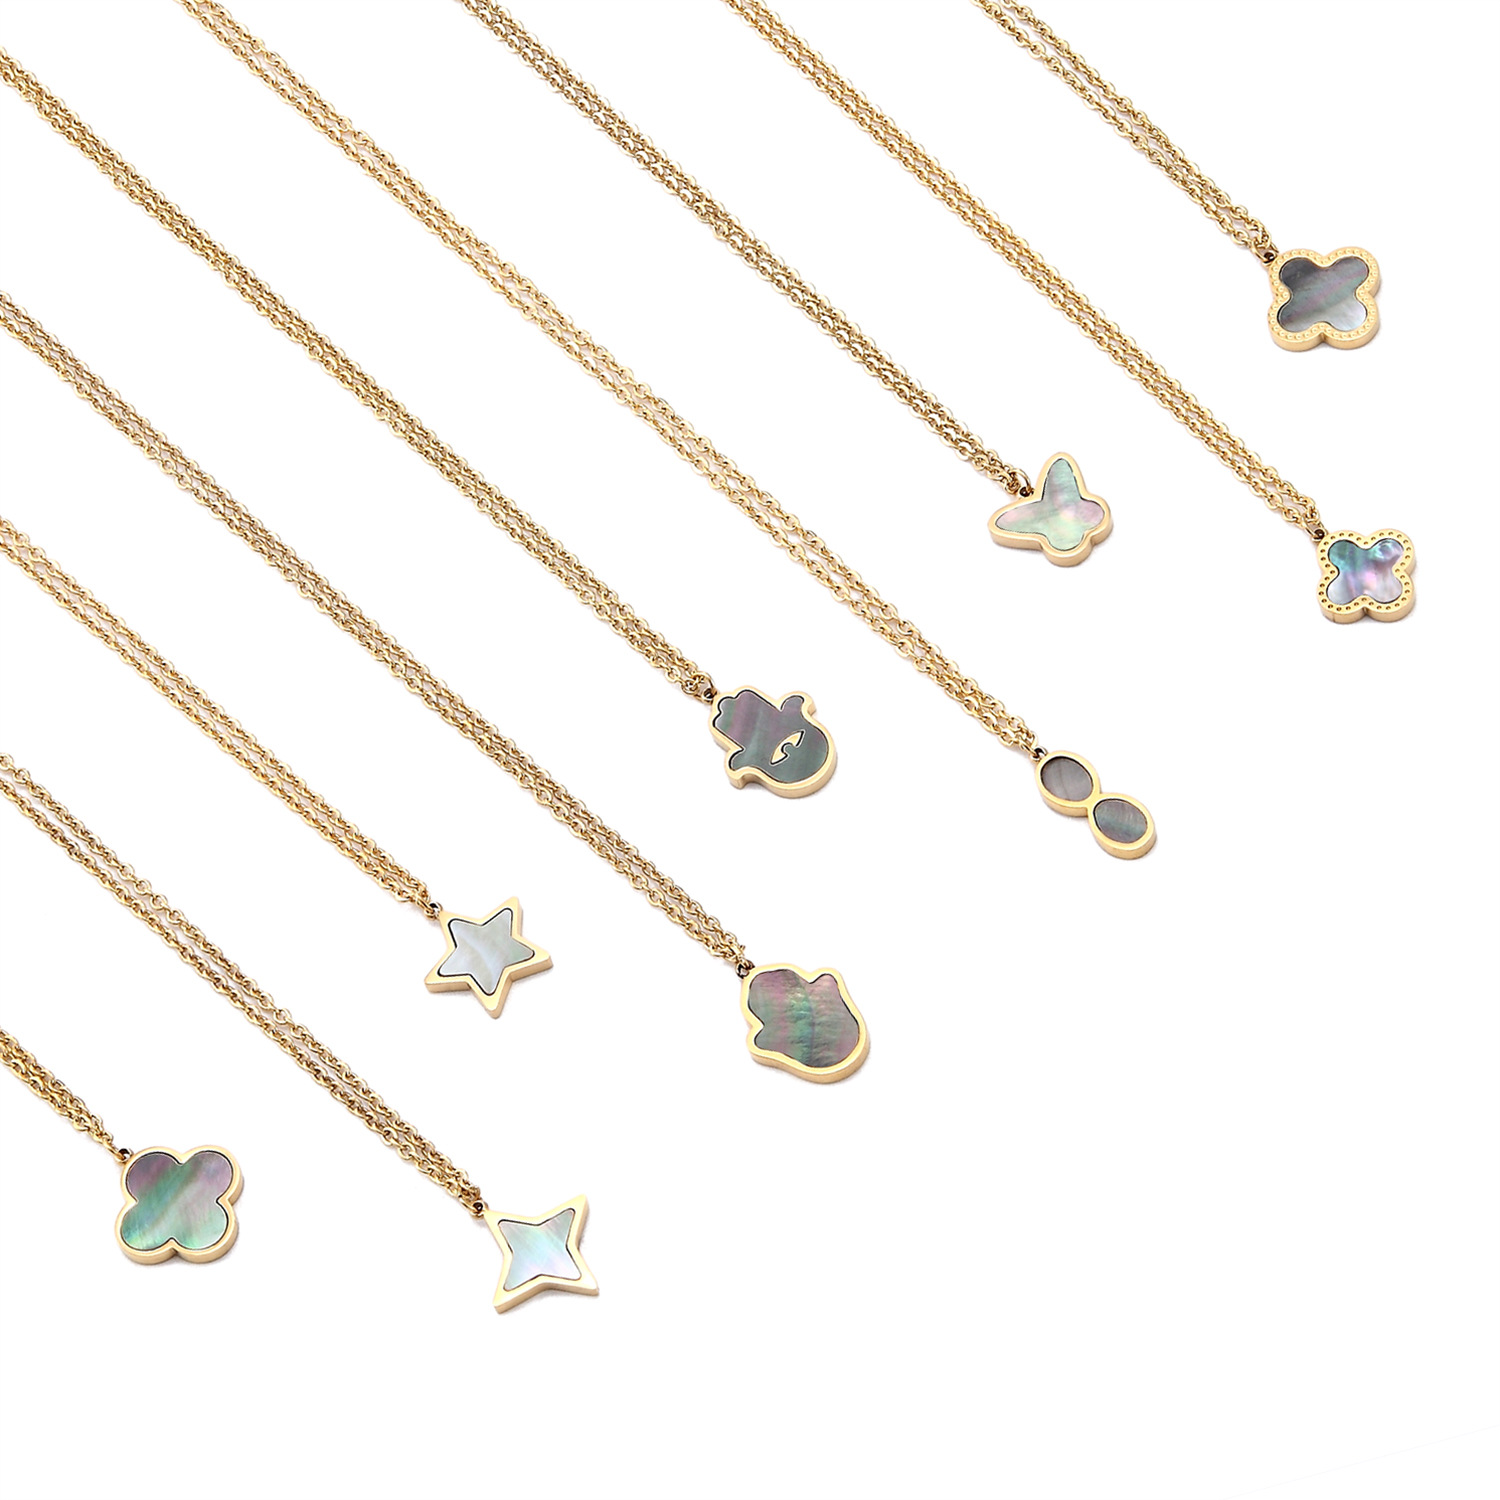 trendy wholesale custom stainless steel shell necklace pendants jewelry for men women,women's men's jewelry necklaces